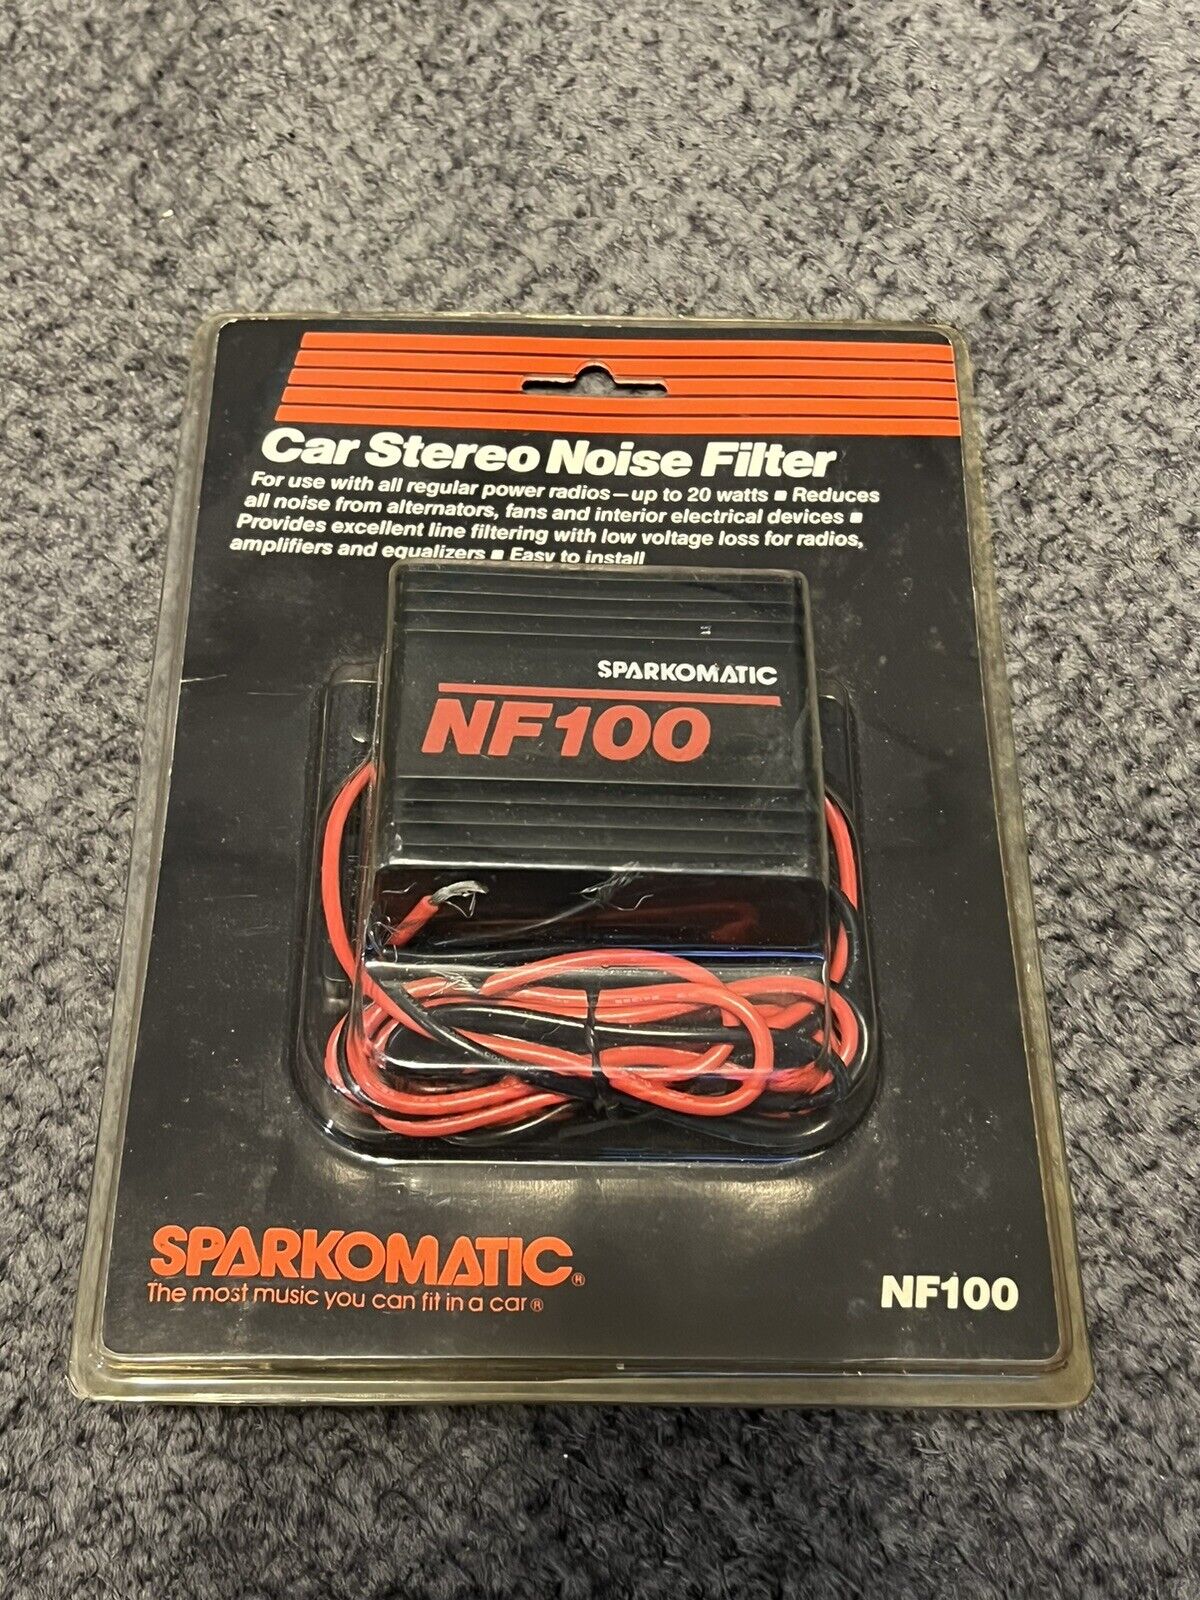 NOS (new old stock) Vintage Sparkomatic NF100 Line Filter sealed package